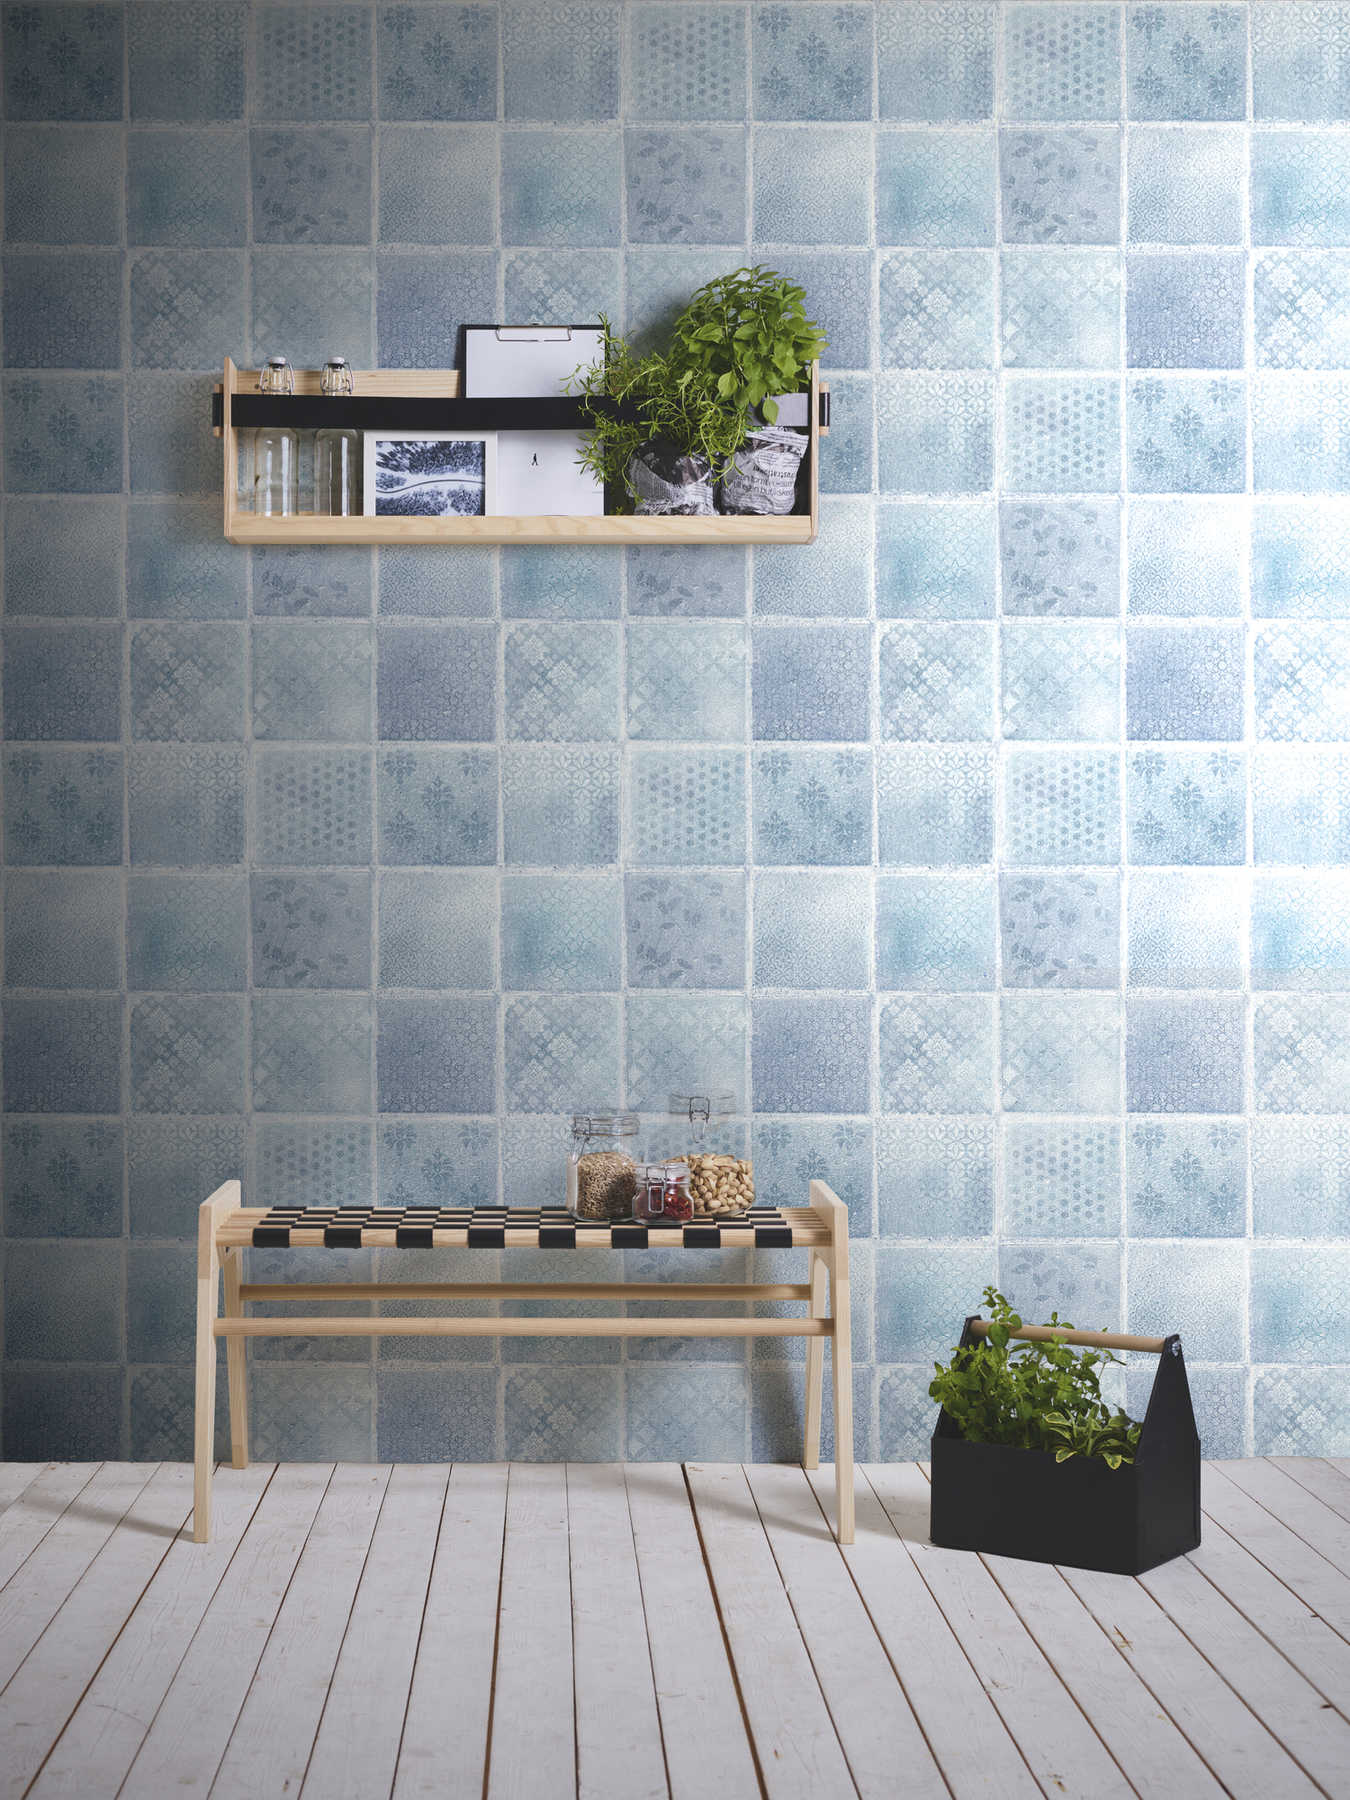             Tapete in Mosaik- und Fliesenoptik – Blau, Grau, Creme
        